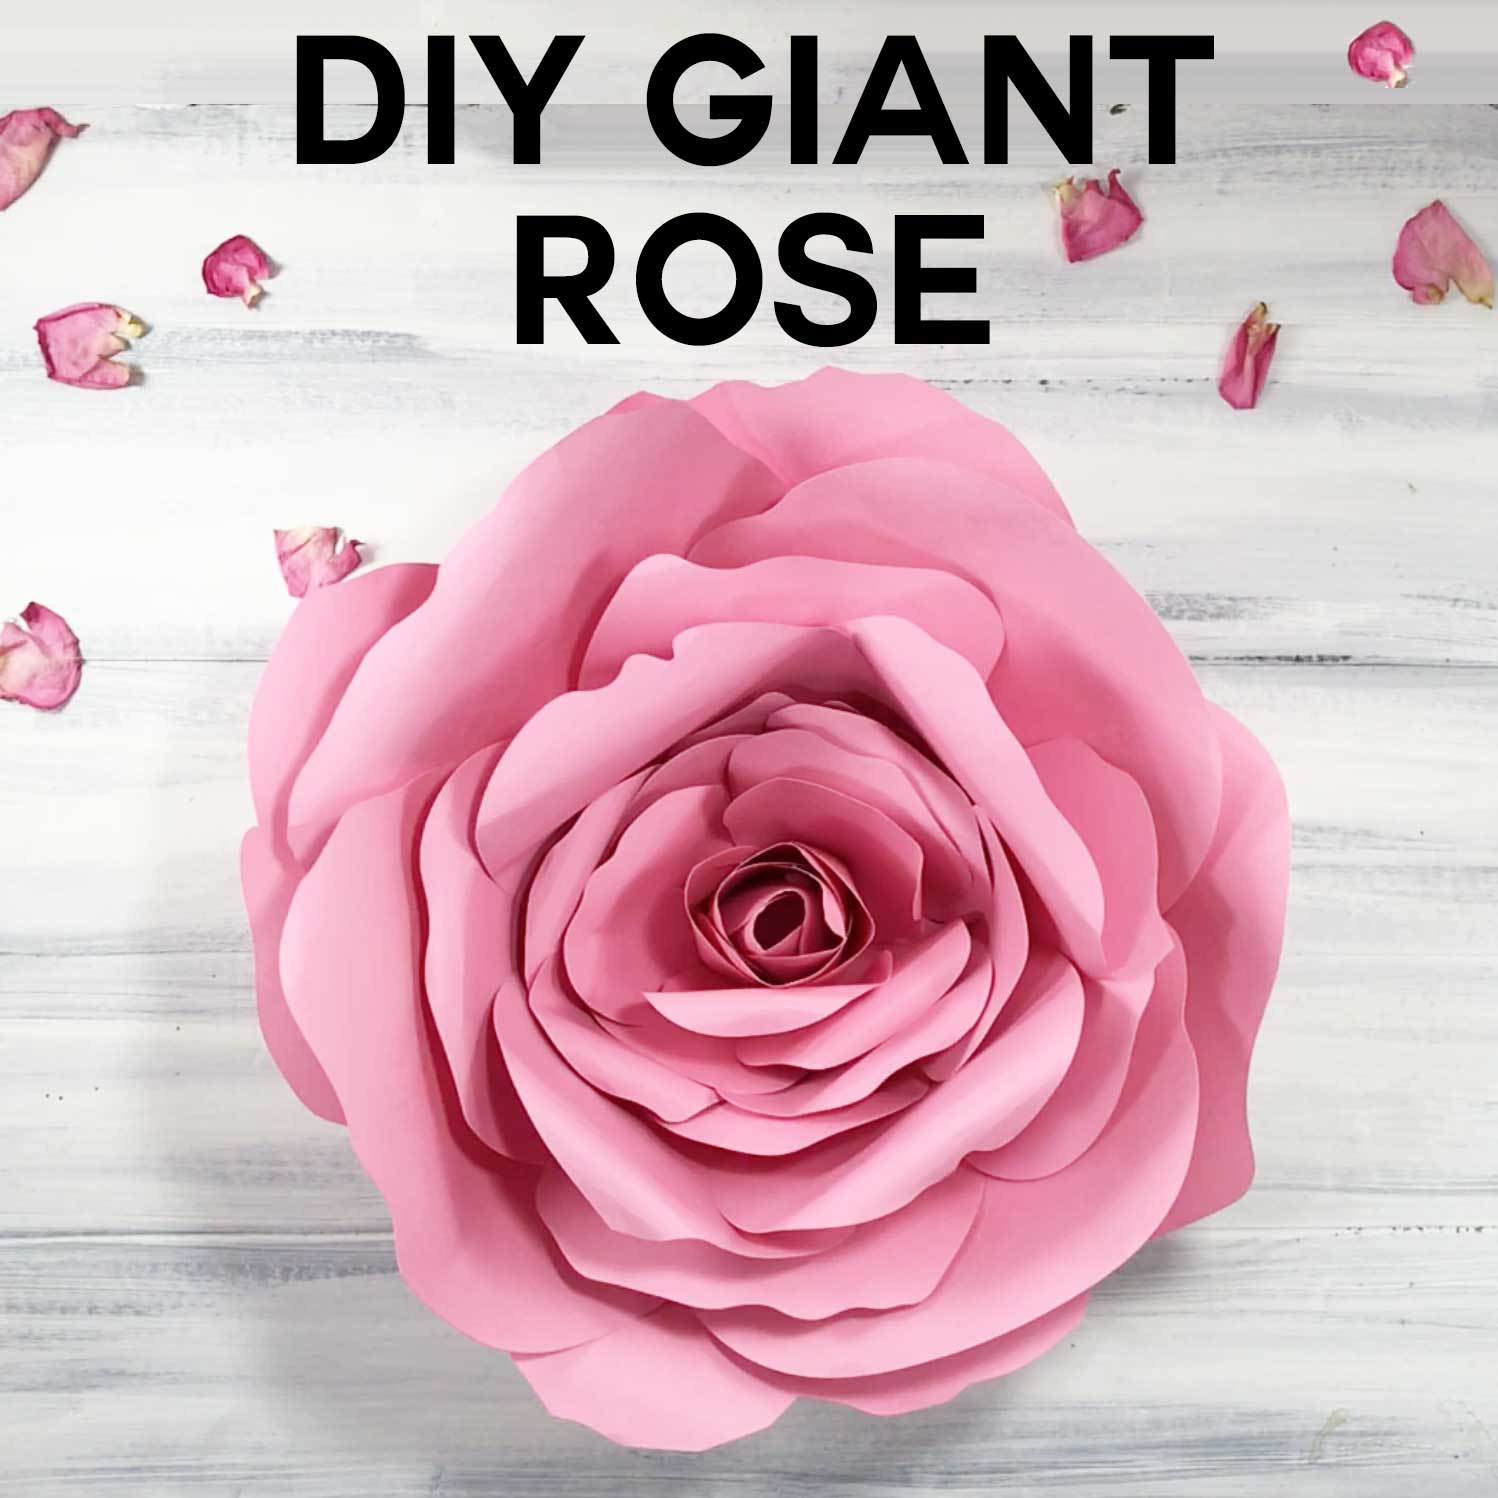 Giant Flower Spellbound Rose | Papercraft | Cricut | Tutorial | Free Files